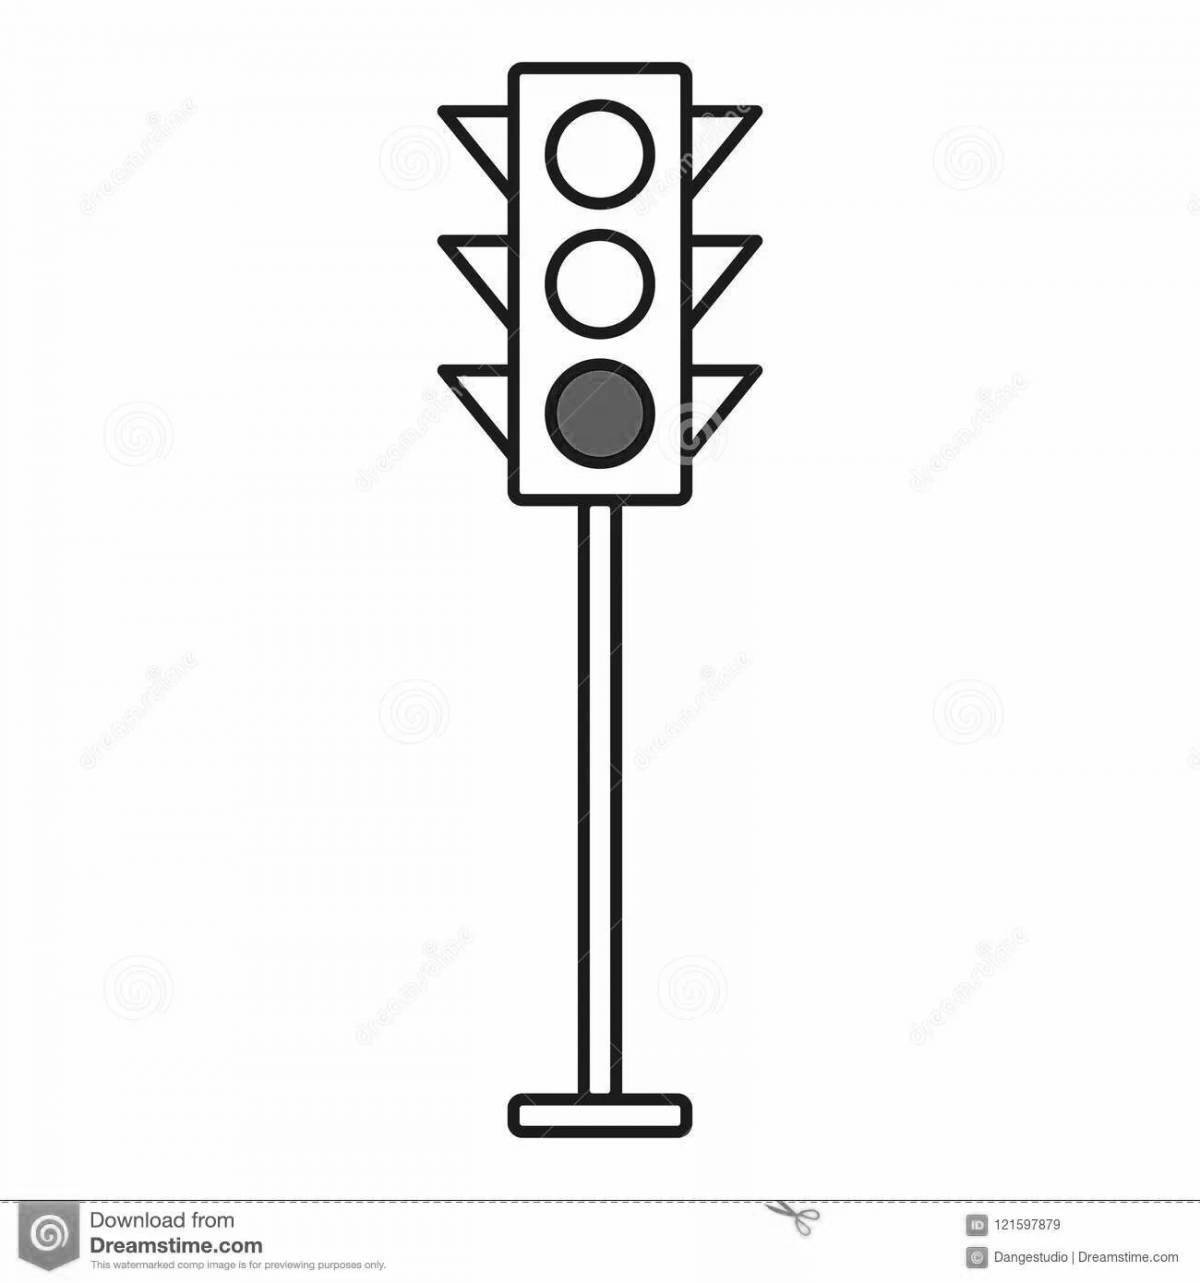 A fascinating traffic light for pedestrians